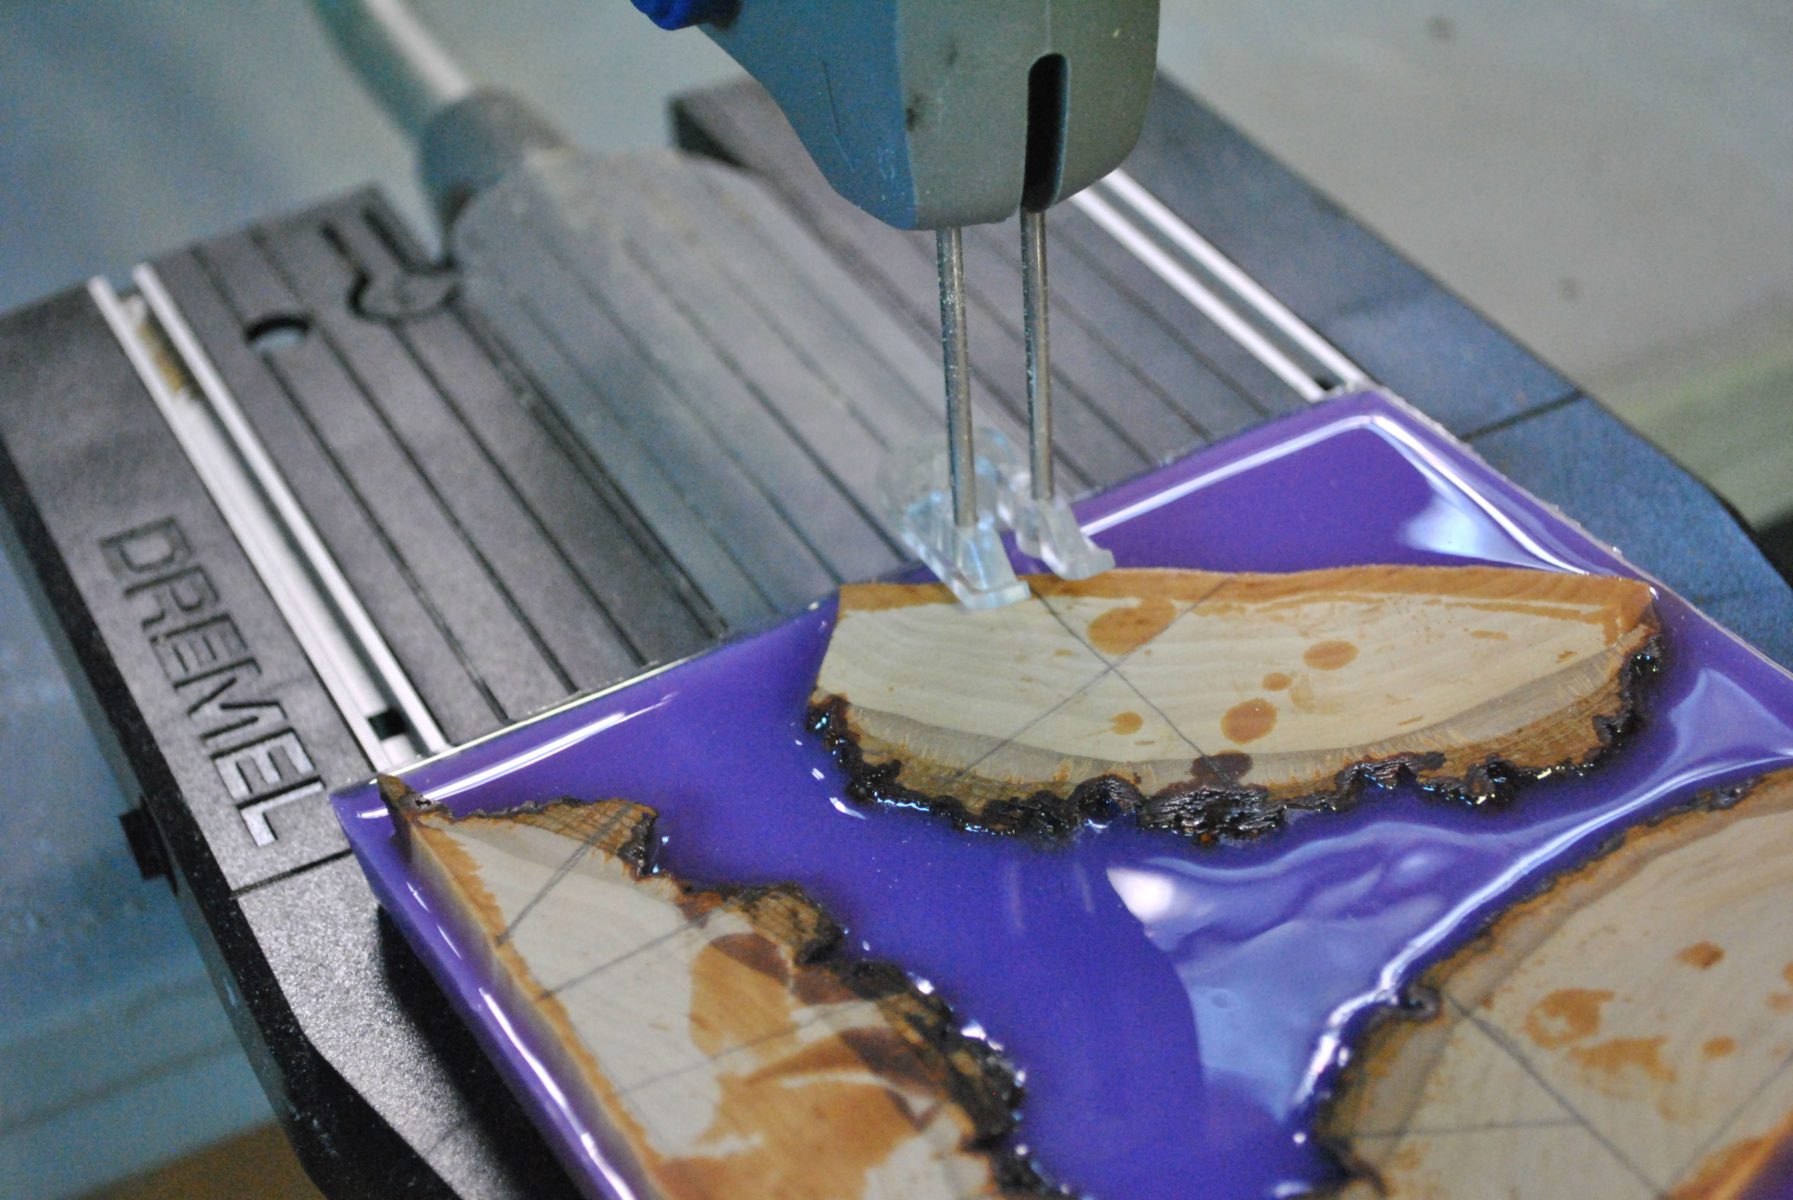 wood cuts in lavender resin being cut my dremel moto saw